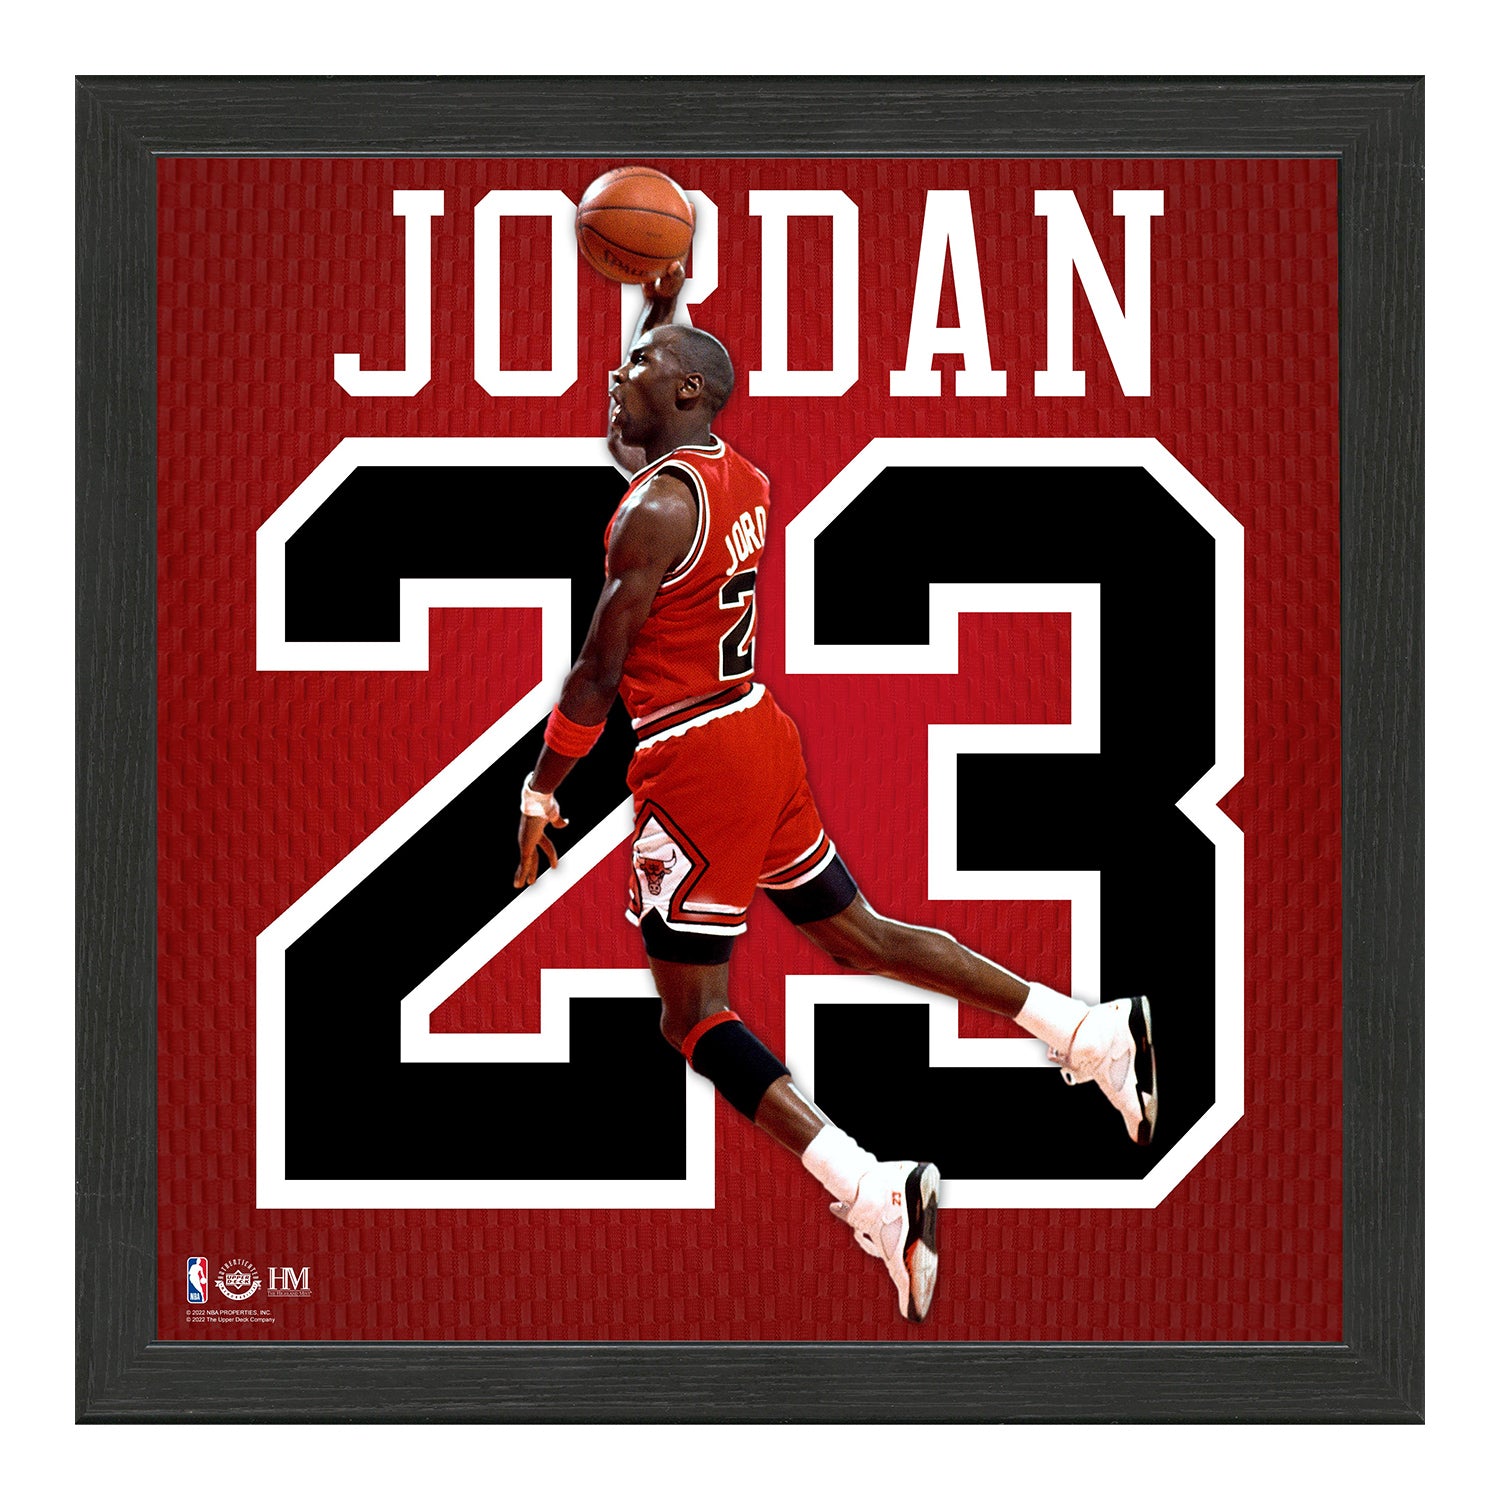 Michael Jordan basketball card (Chicago Bulls Legend) 1997 Upper